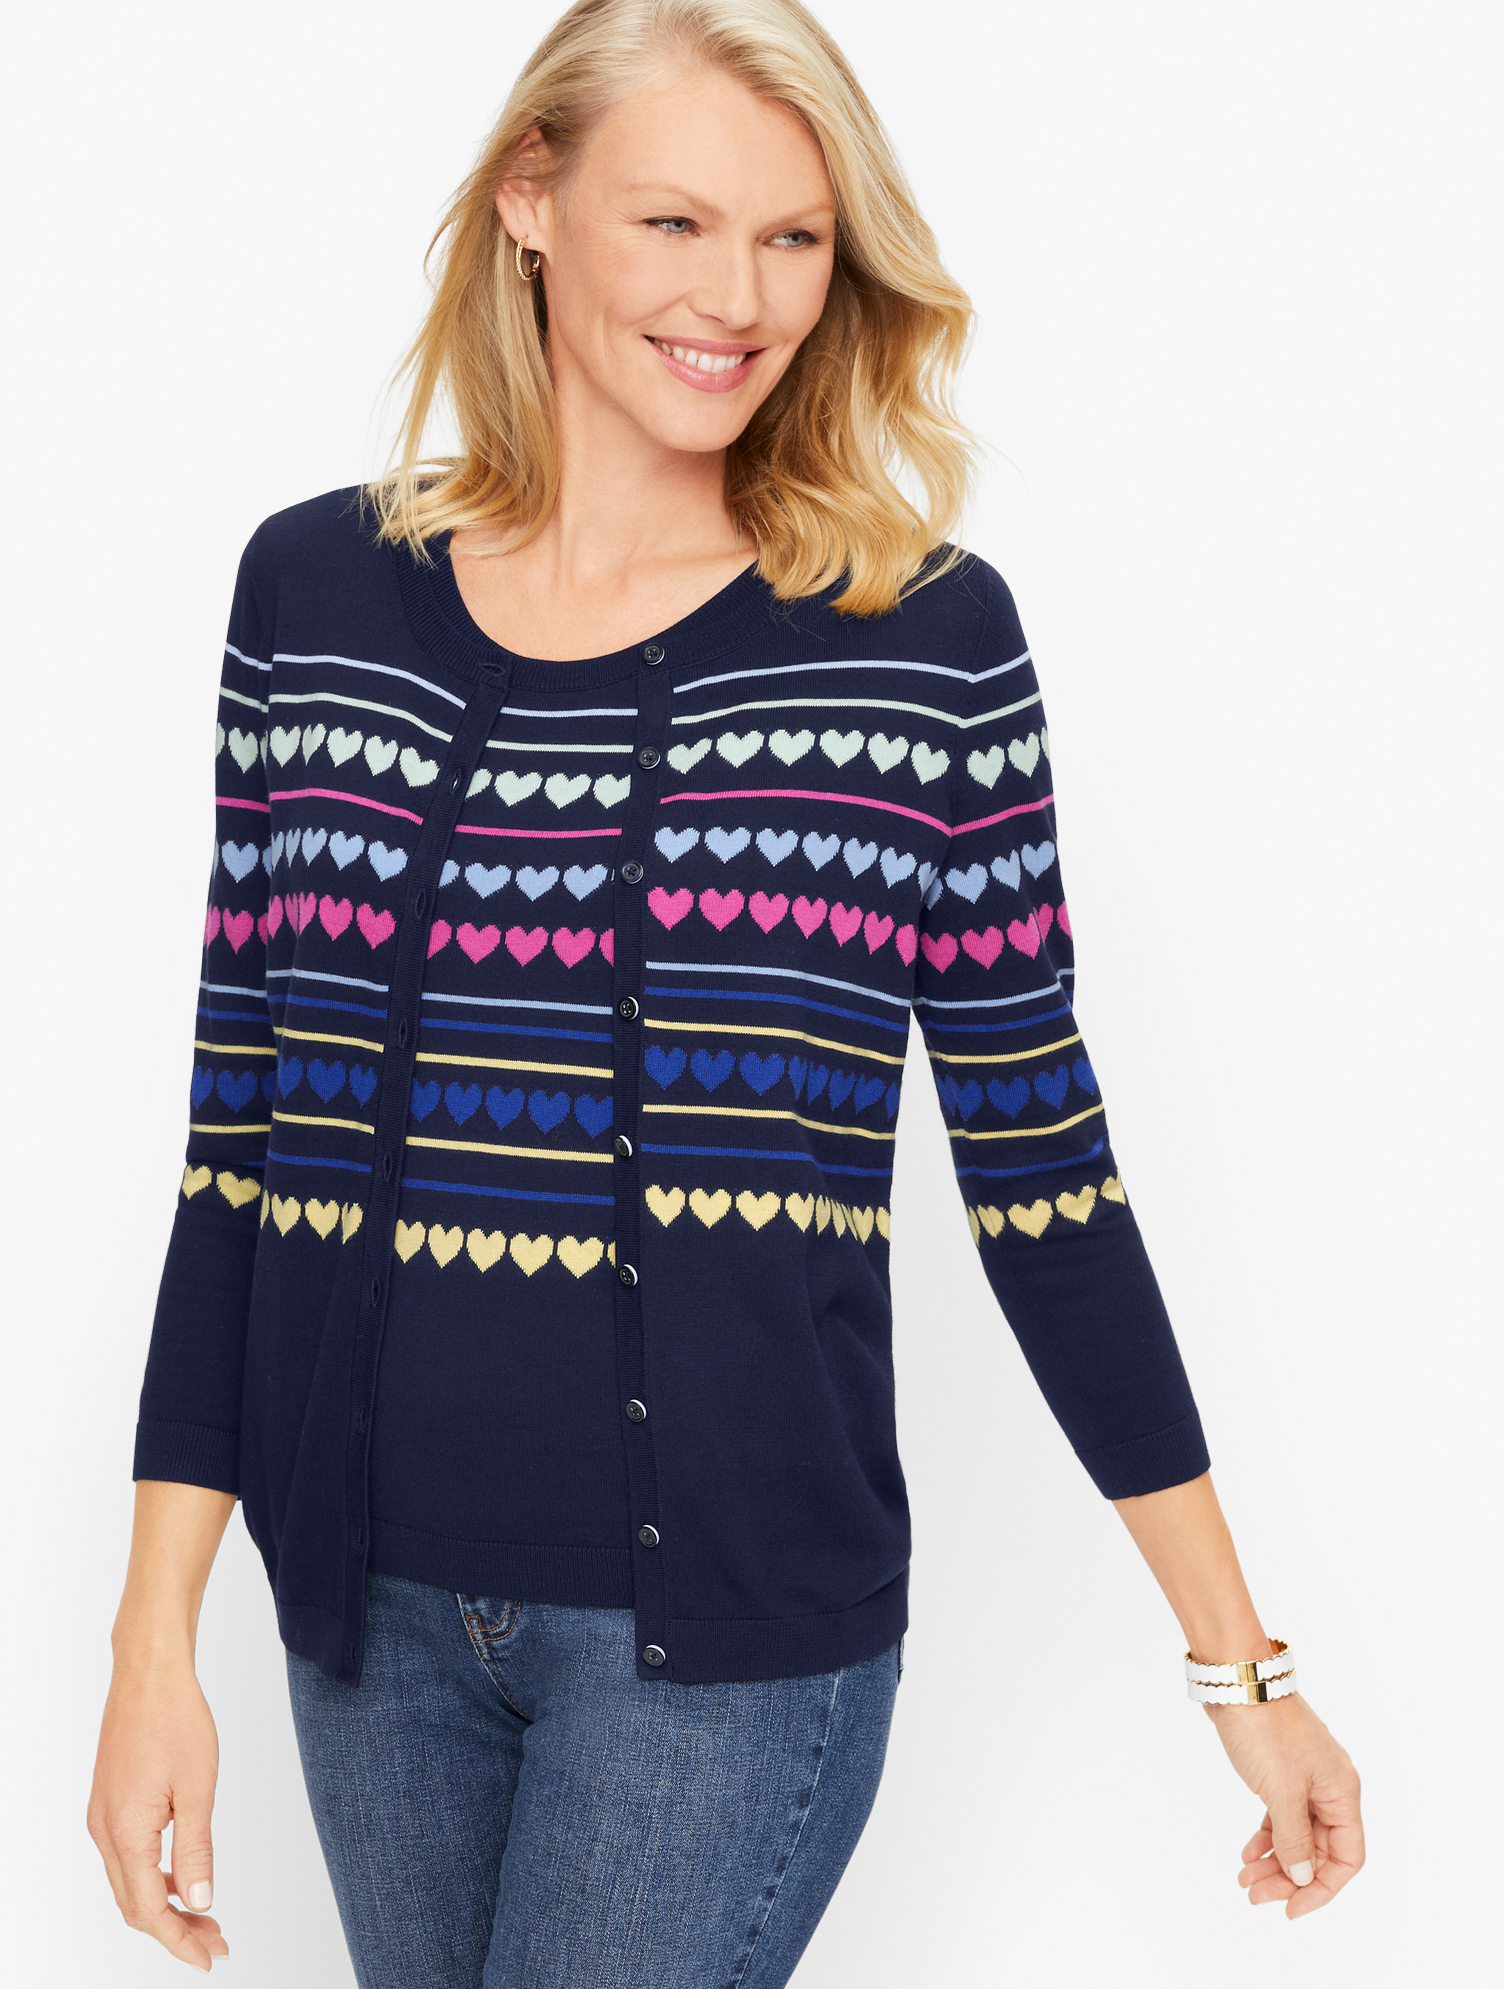 Talbots Charming Cardigan Sweater - Hearts & Stripes - Blue - Xs